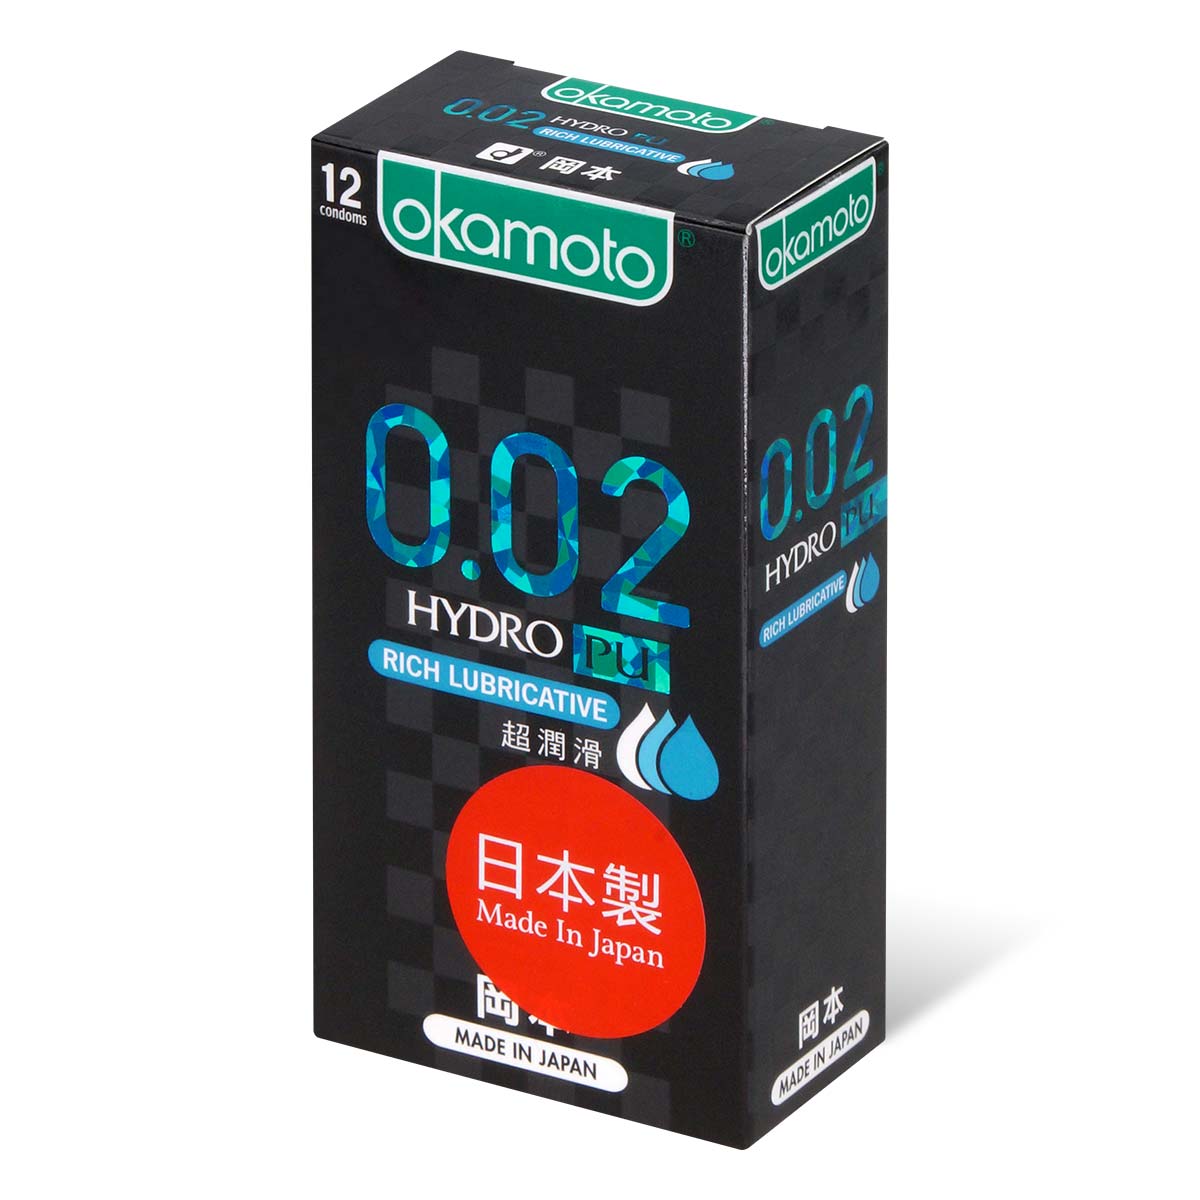 Okamoto 0.02 Rich Lubricative 12's Pack PU Condom-p_1